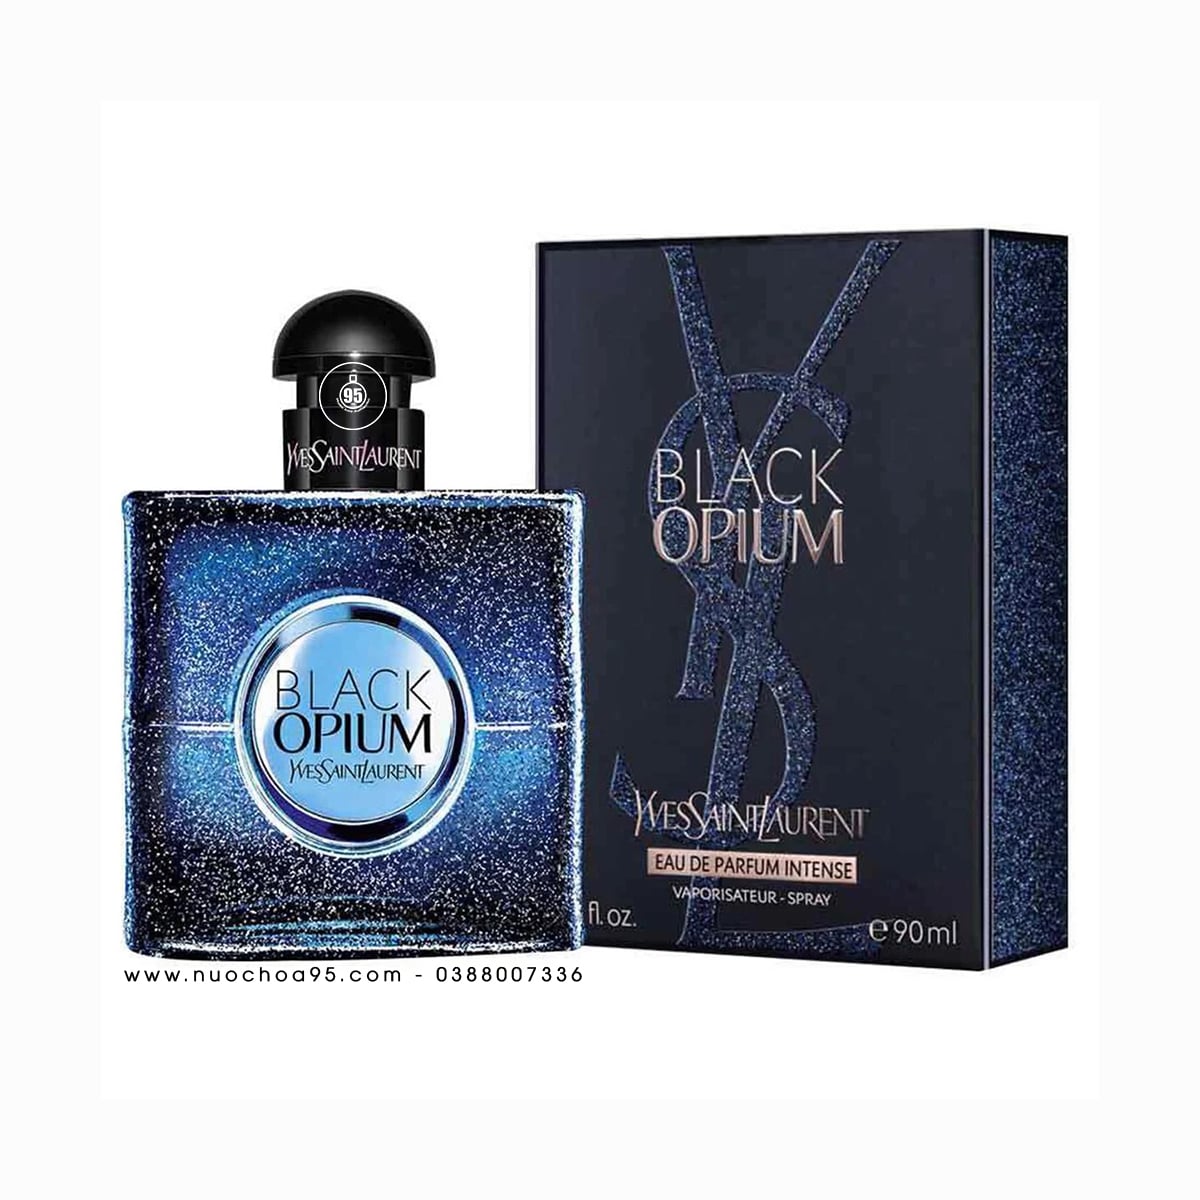 Nước hoa YSL Black Opium Eau De Parfum Intense